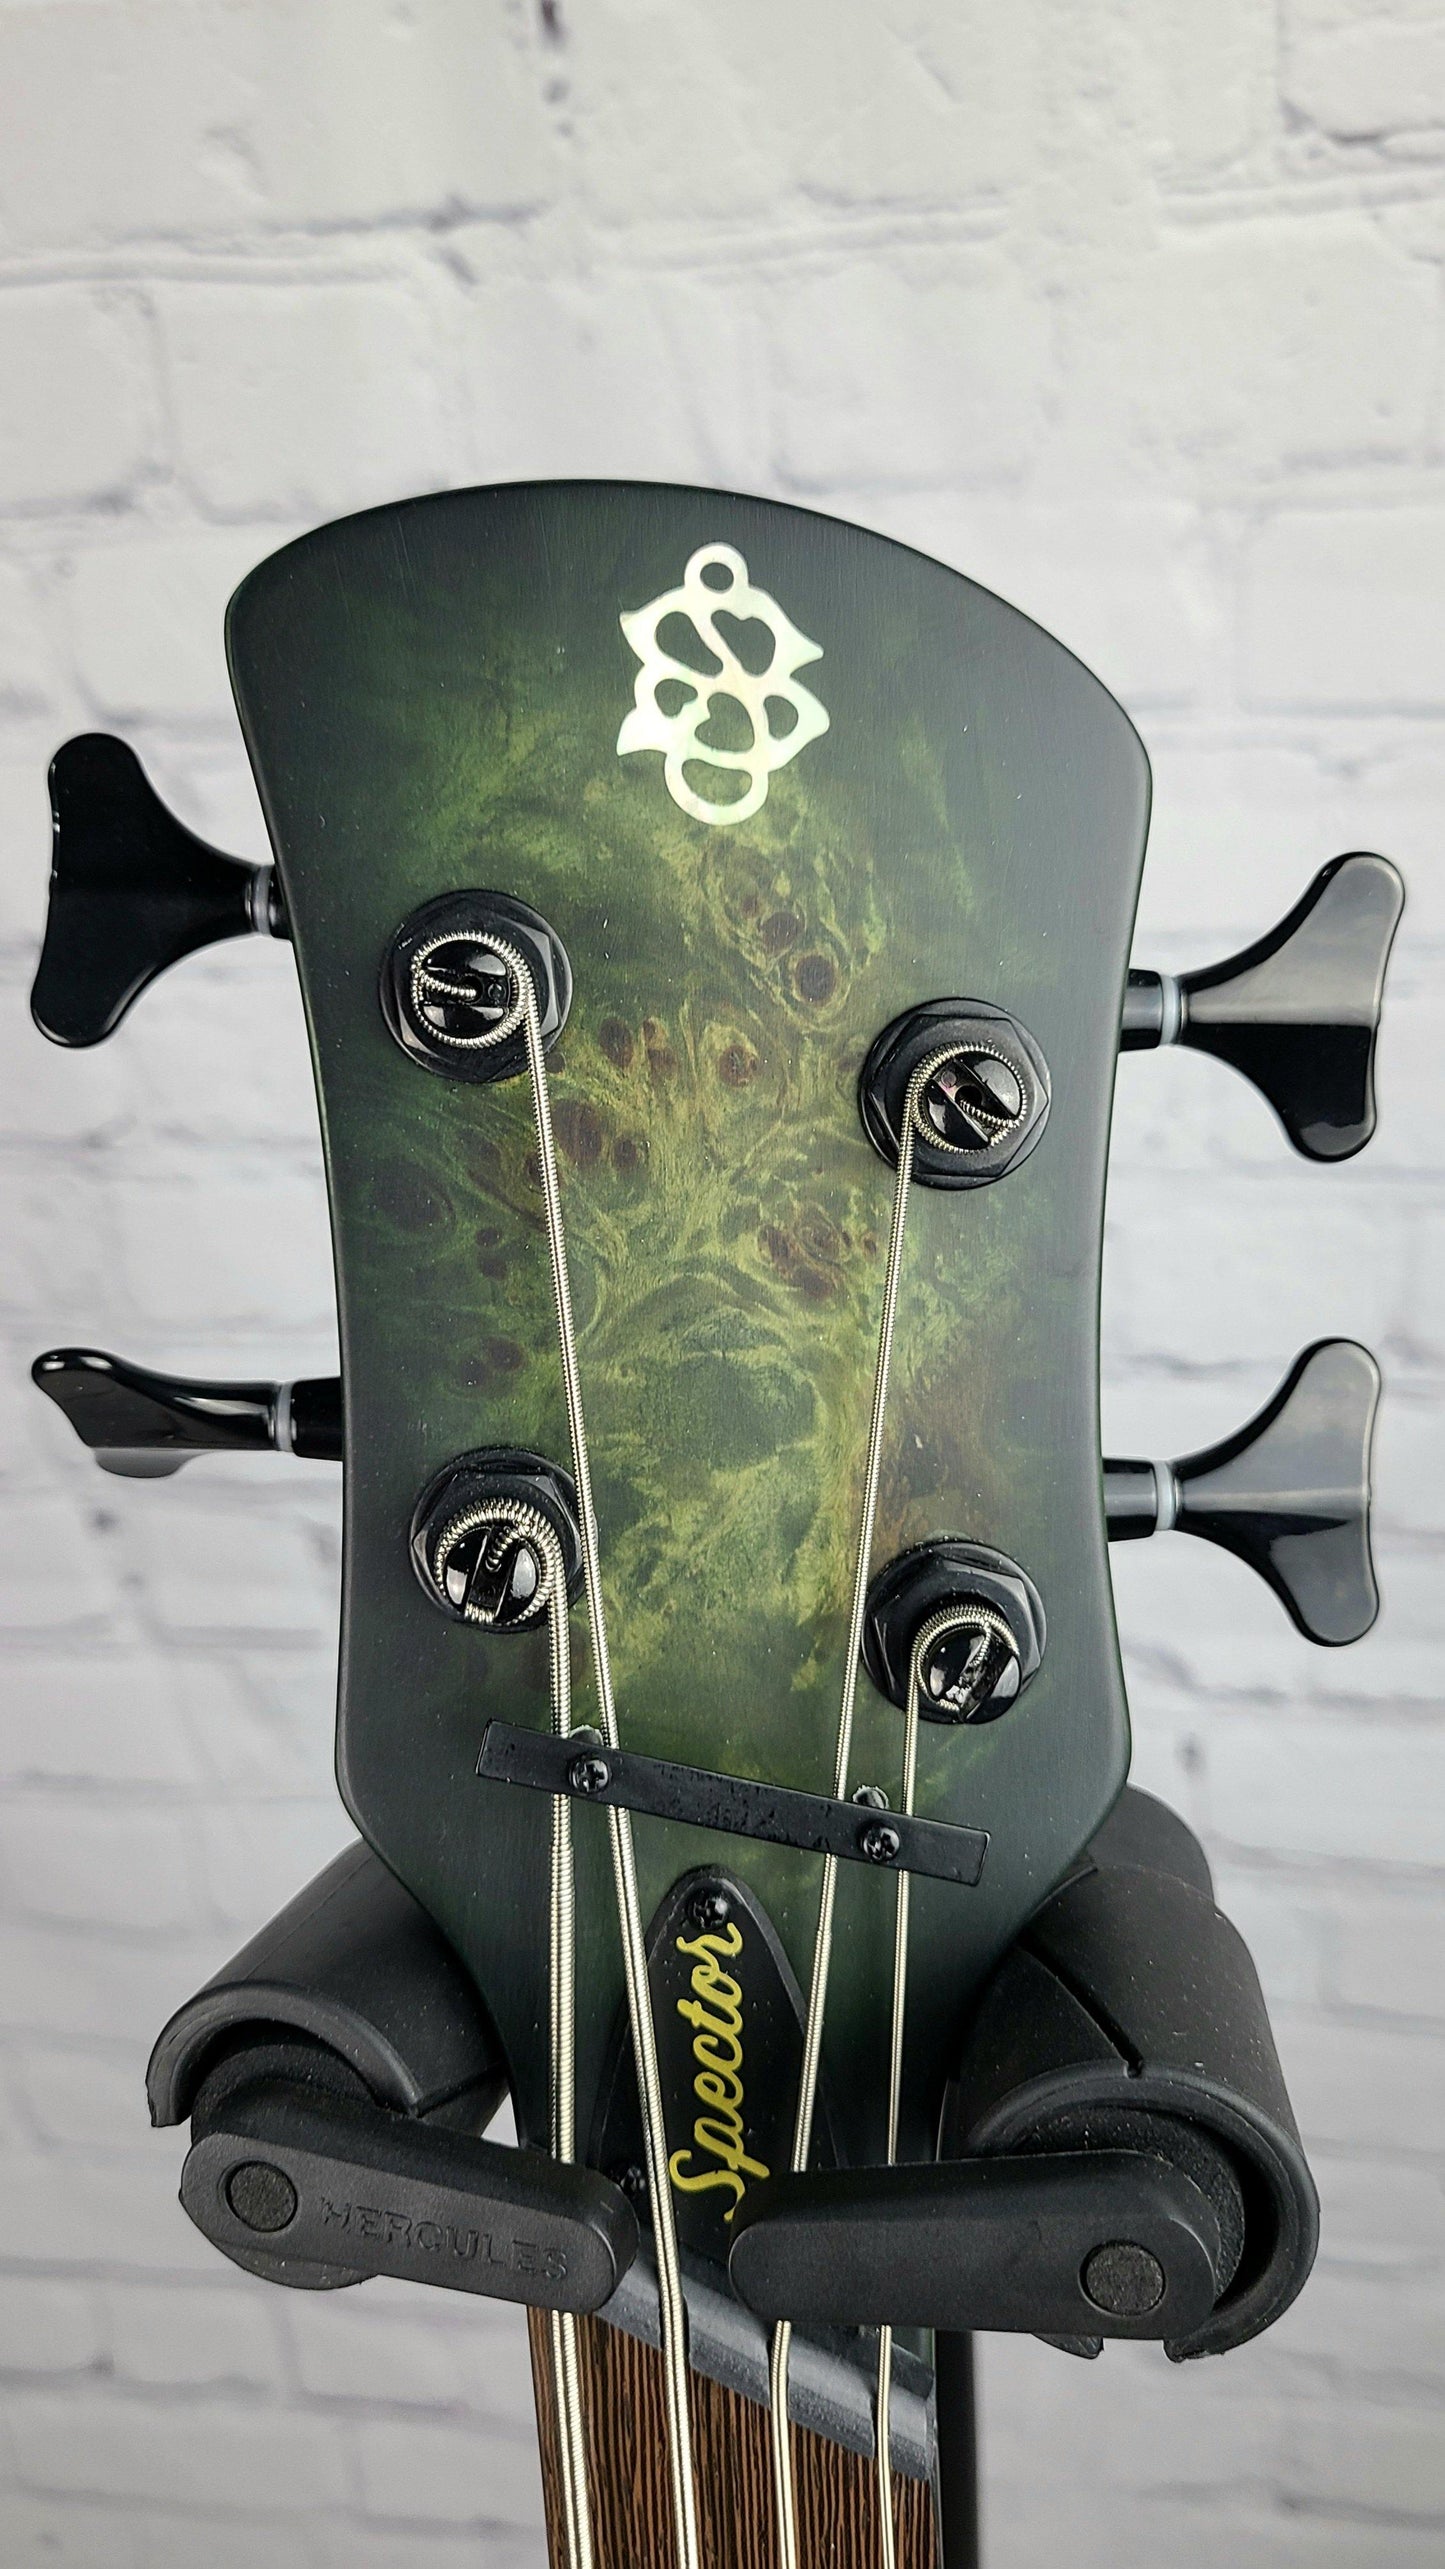 Spector NS Dimension 4 Multiscale Bass Haunted Moss Matte - Guitar Brando